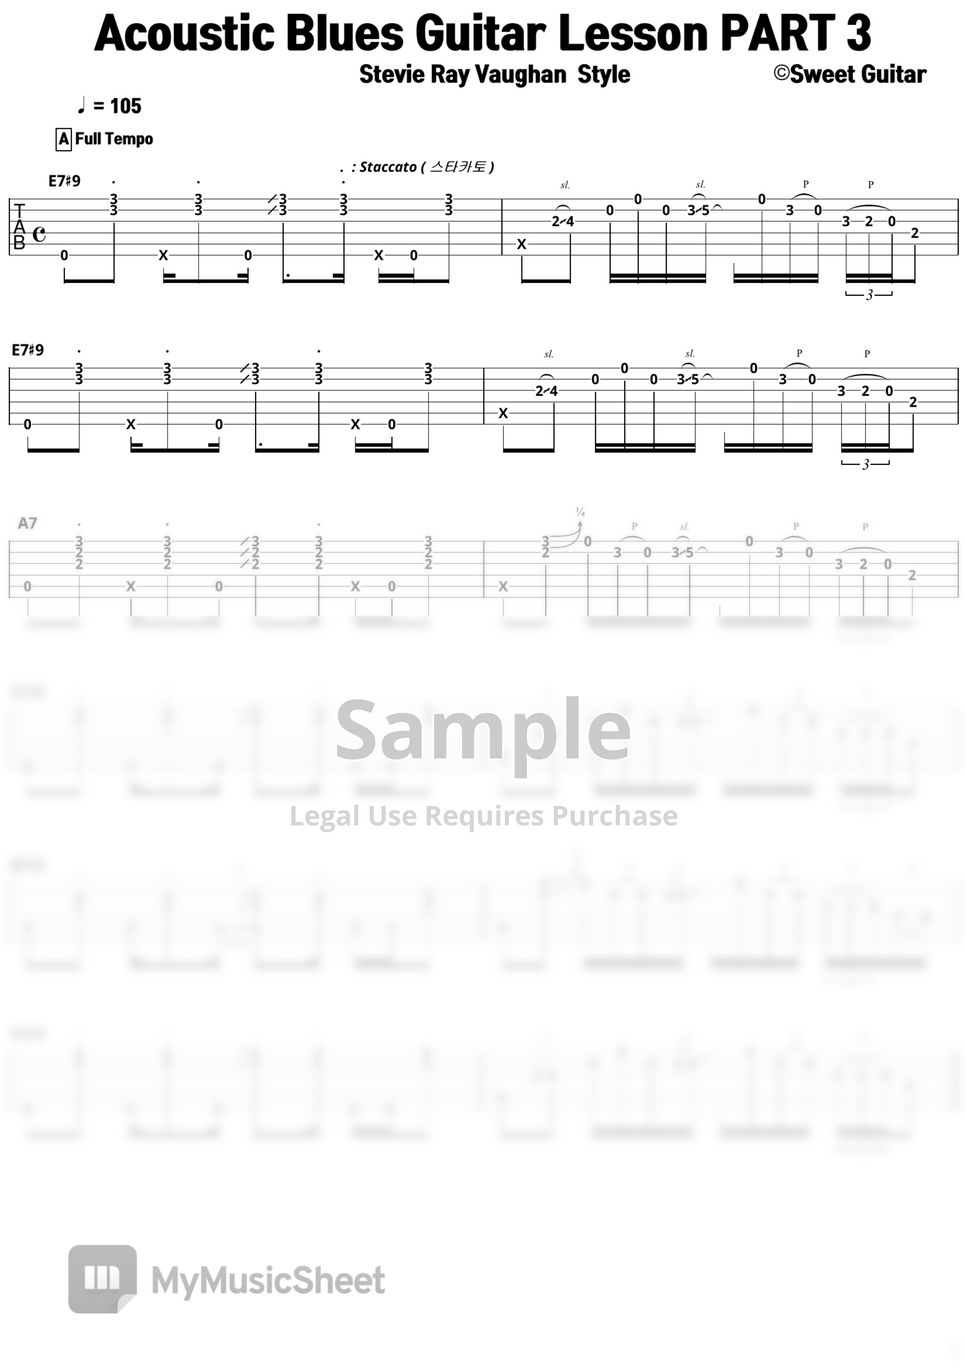 Stevie Ray Vaughan Fingerstyle Blues Guitar Lesson PART 3 TABSㅣ 블루스기타 레슨 3 타브악보 스윗기타스쿨